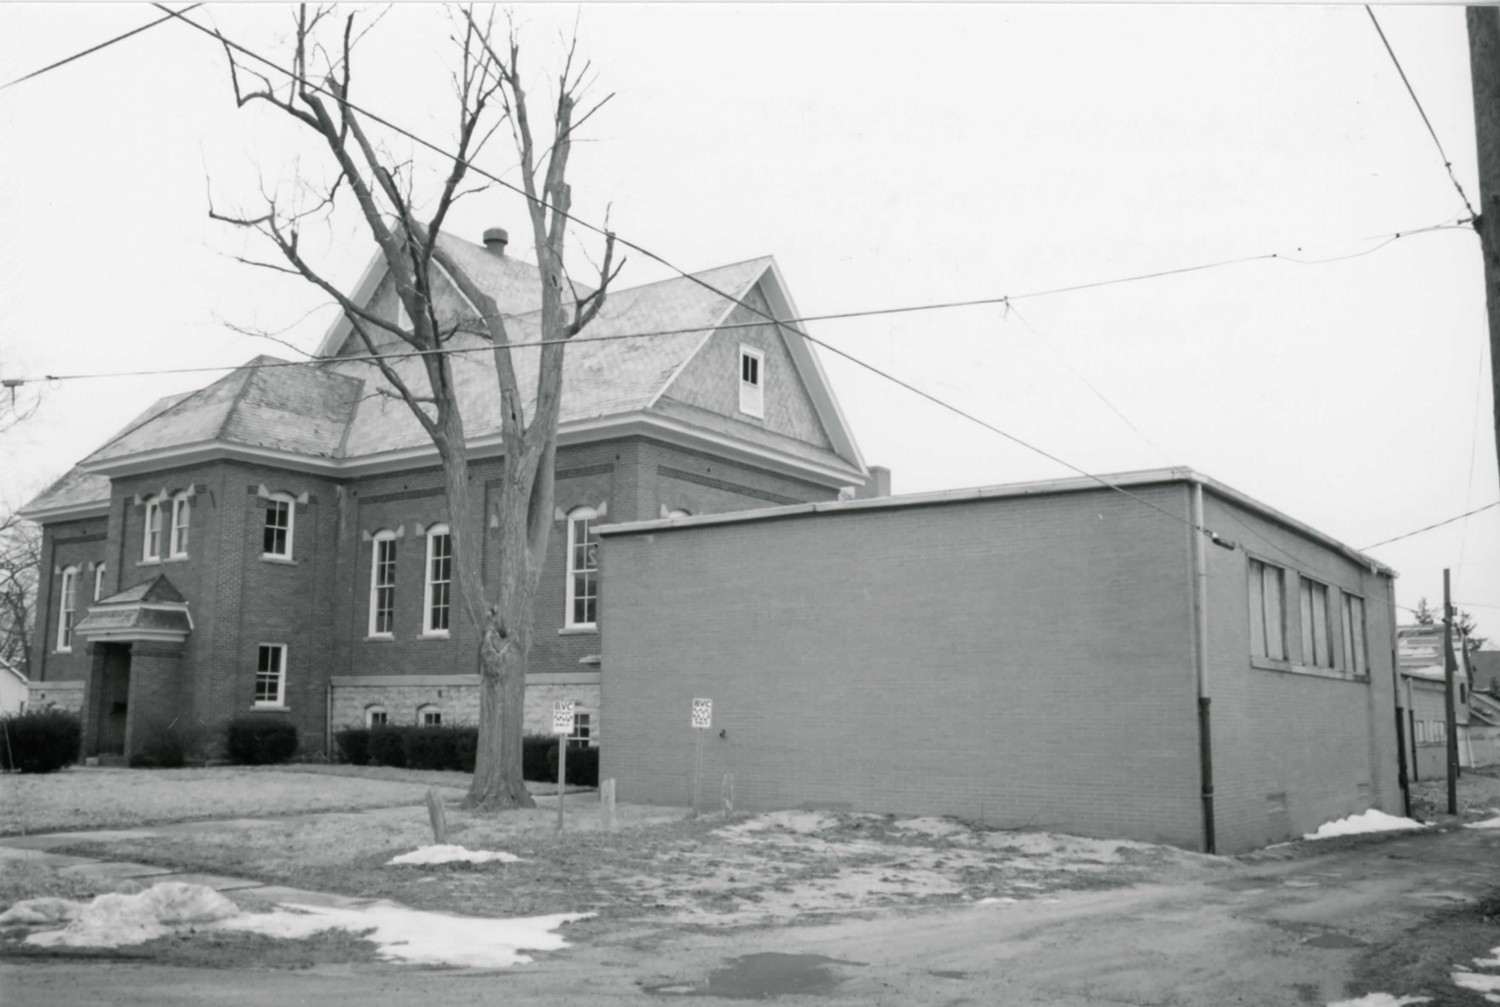 Adams Elementary School, Findlay Ohio Southeast elevation (2003)